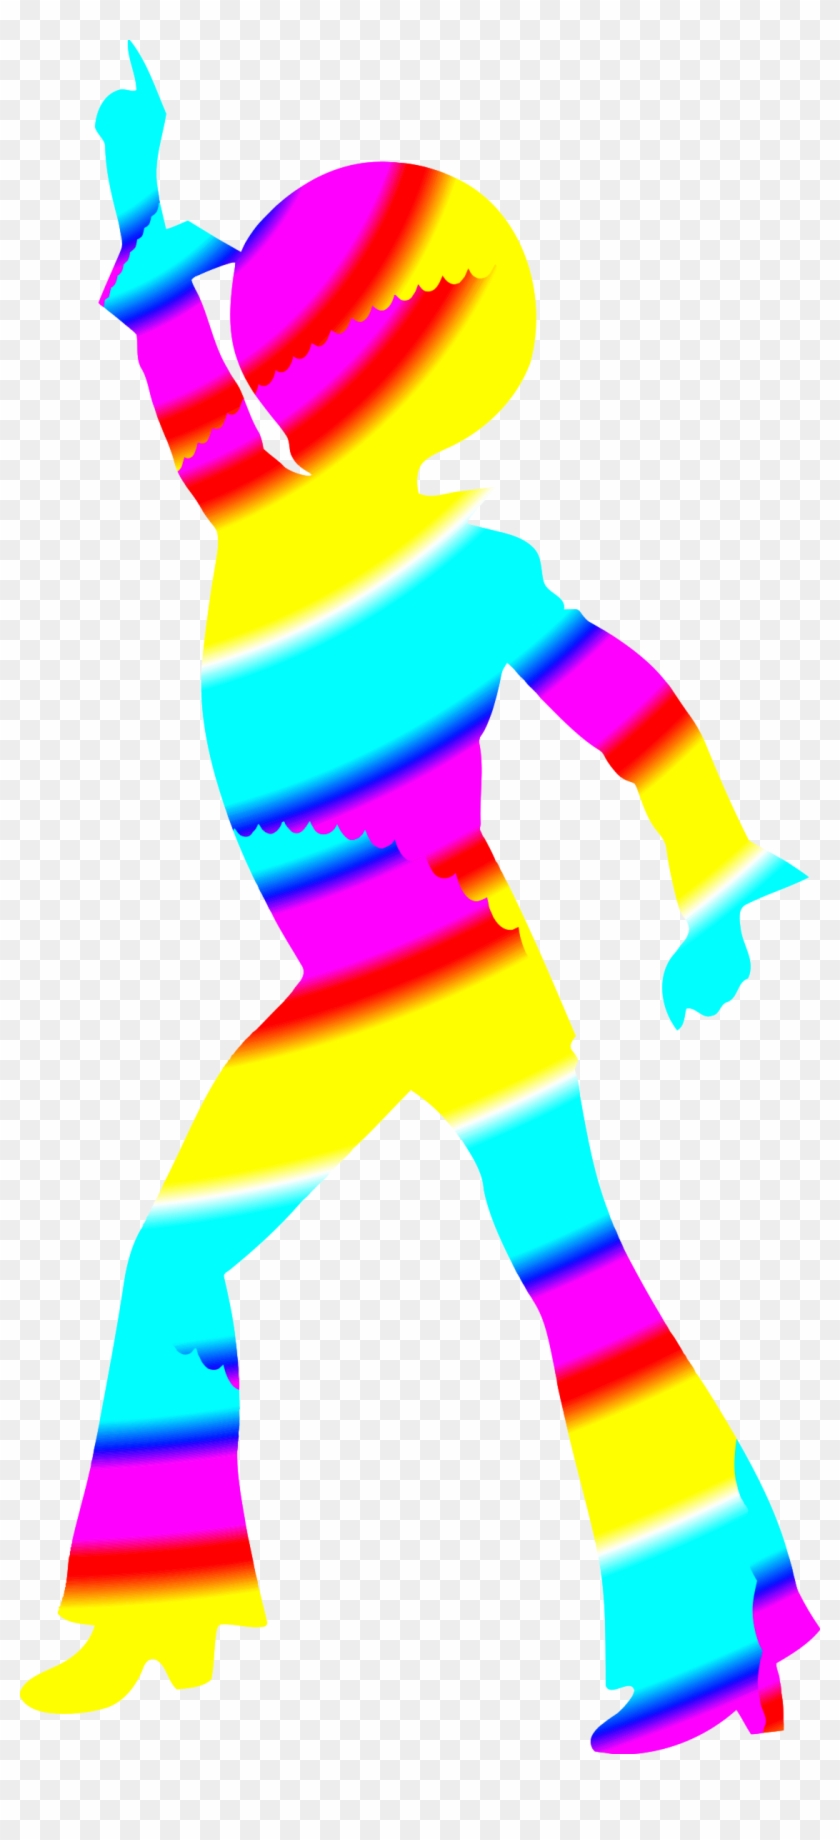 Disco Dancer 6 - Colorful Disco Dancer #66908